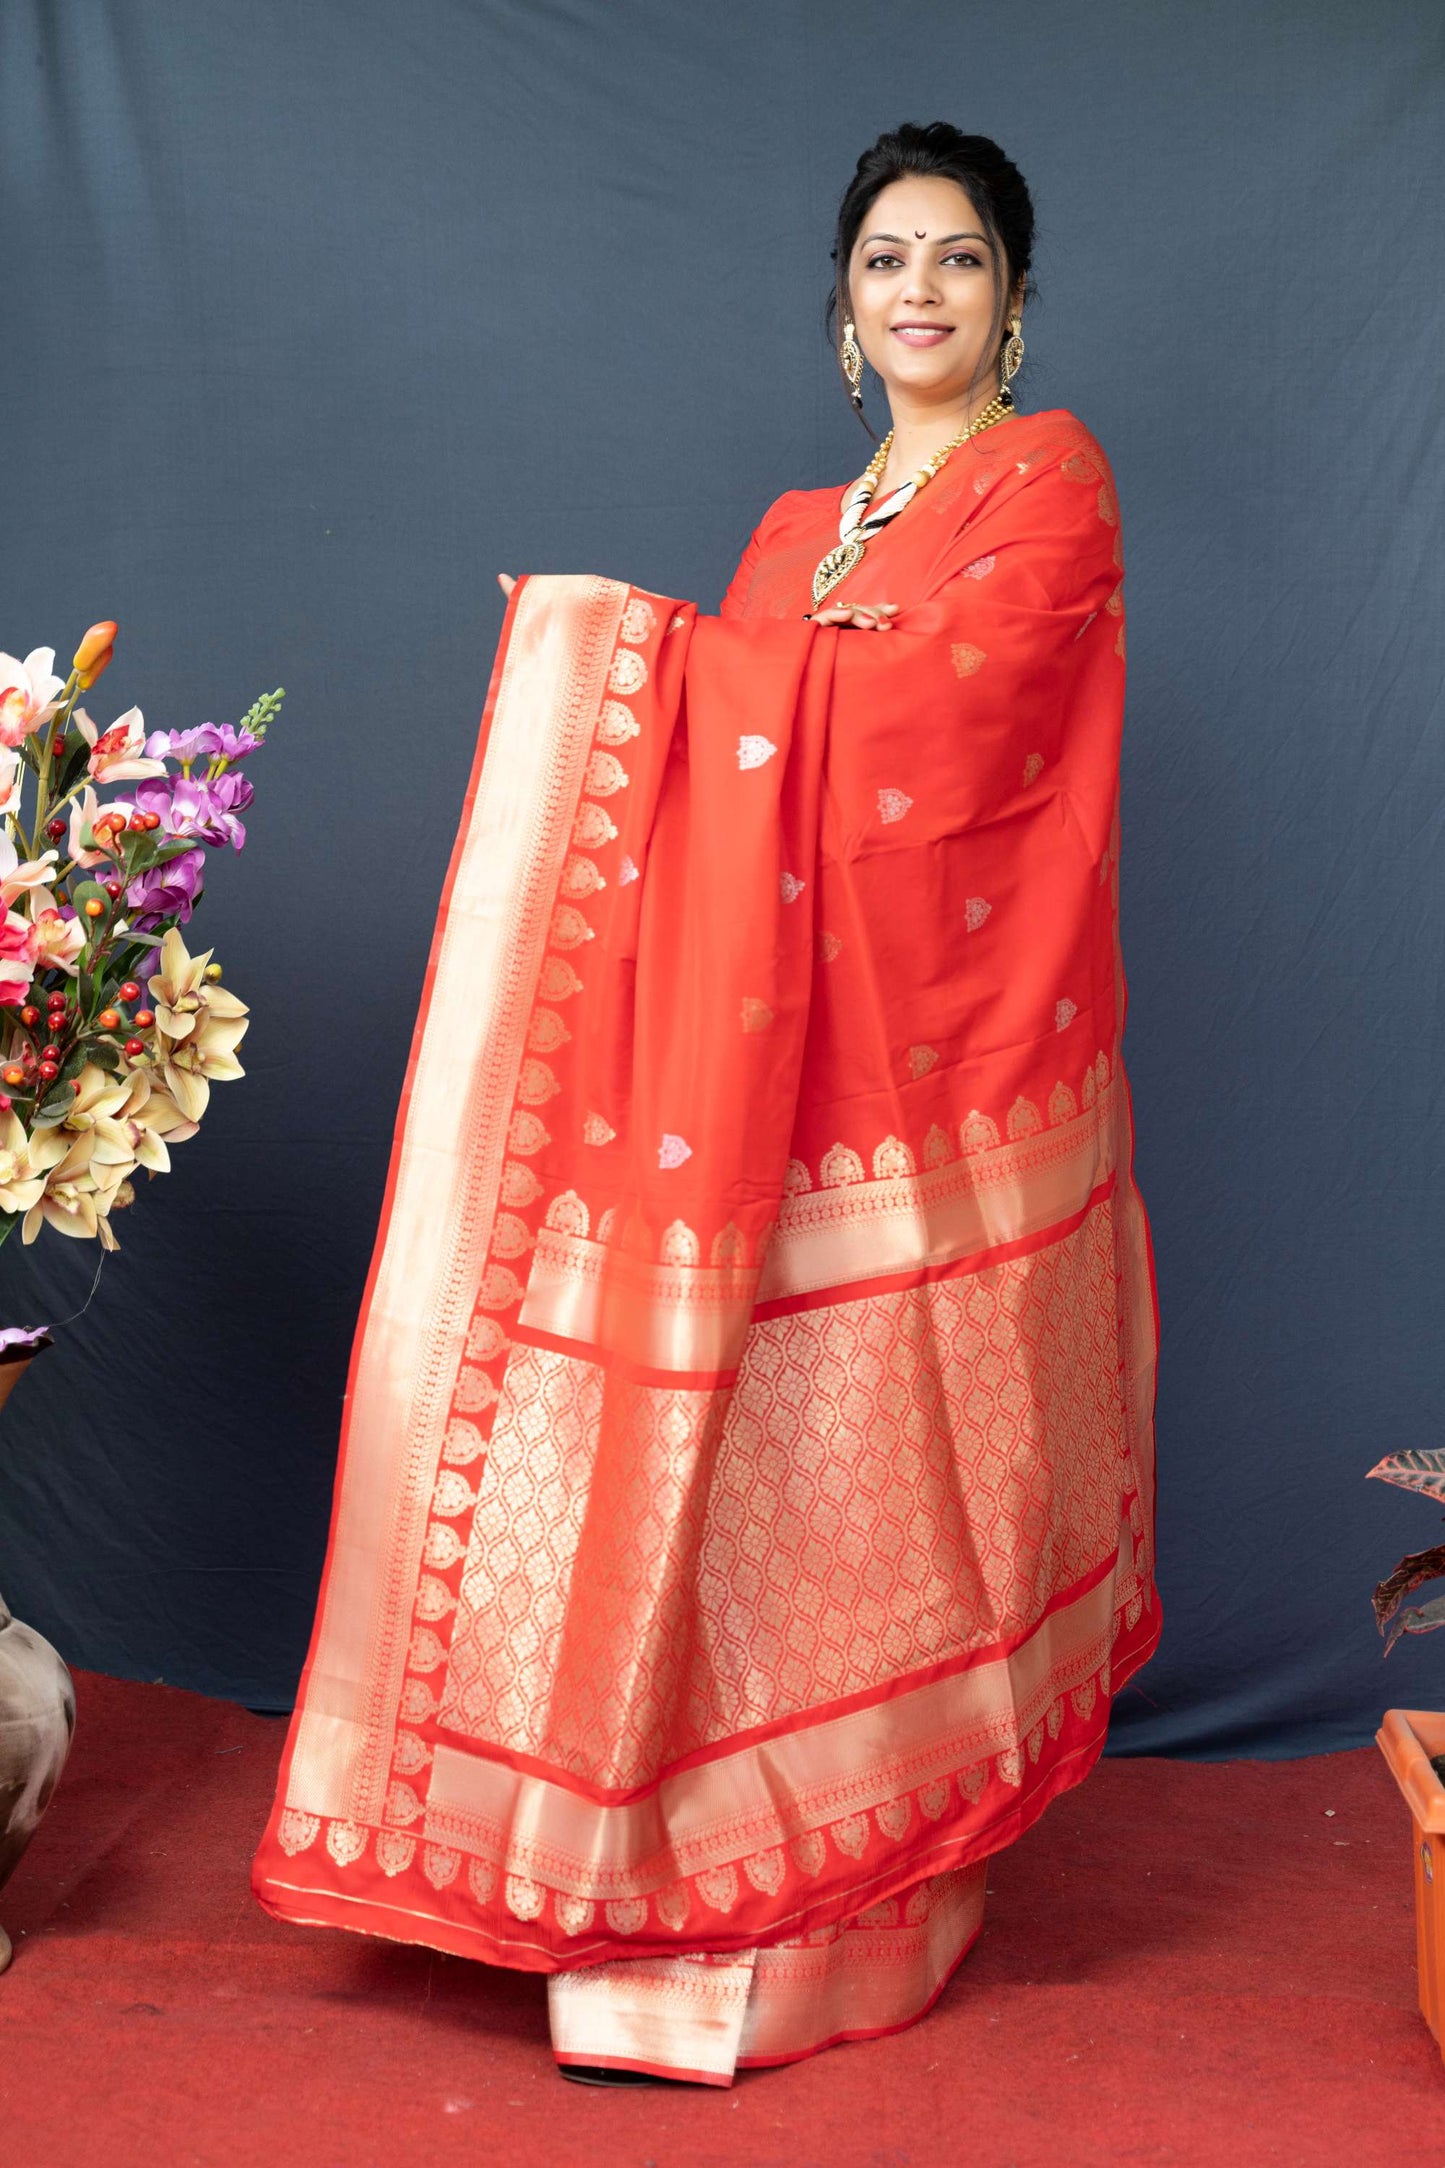 Shafnufab Women's Banarasi Silk Saree With Blouse  In  Red